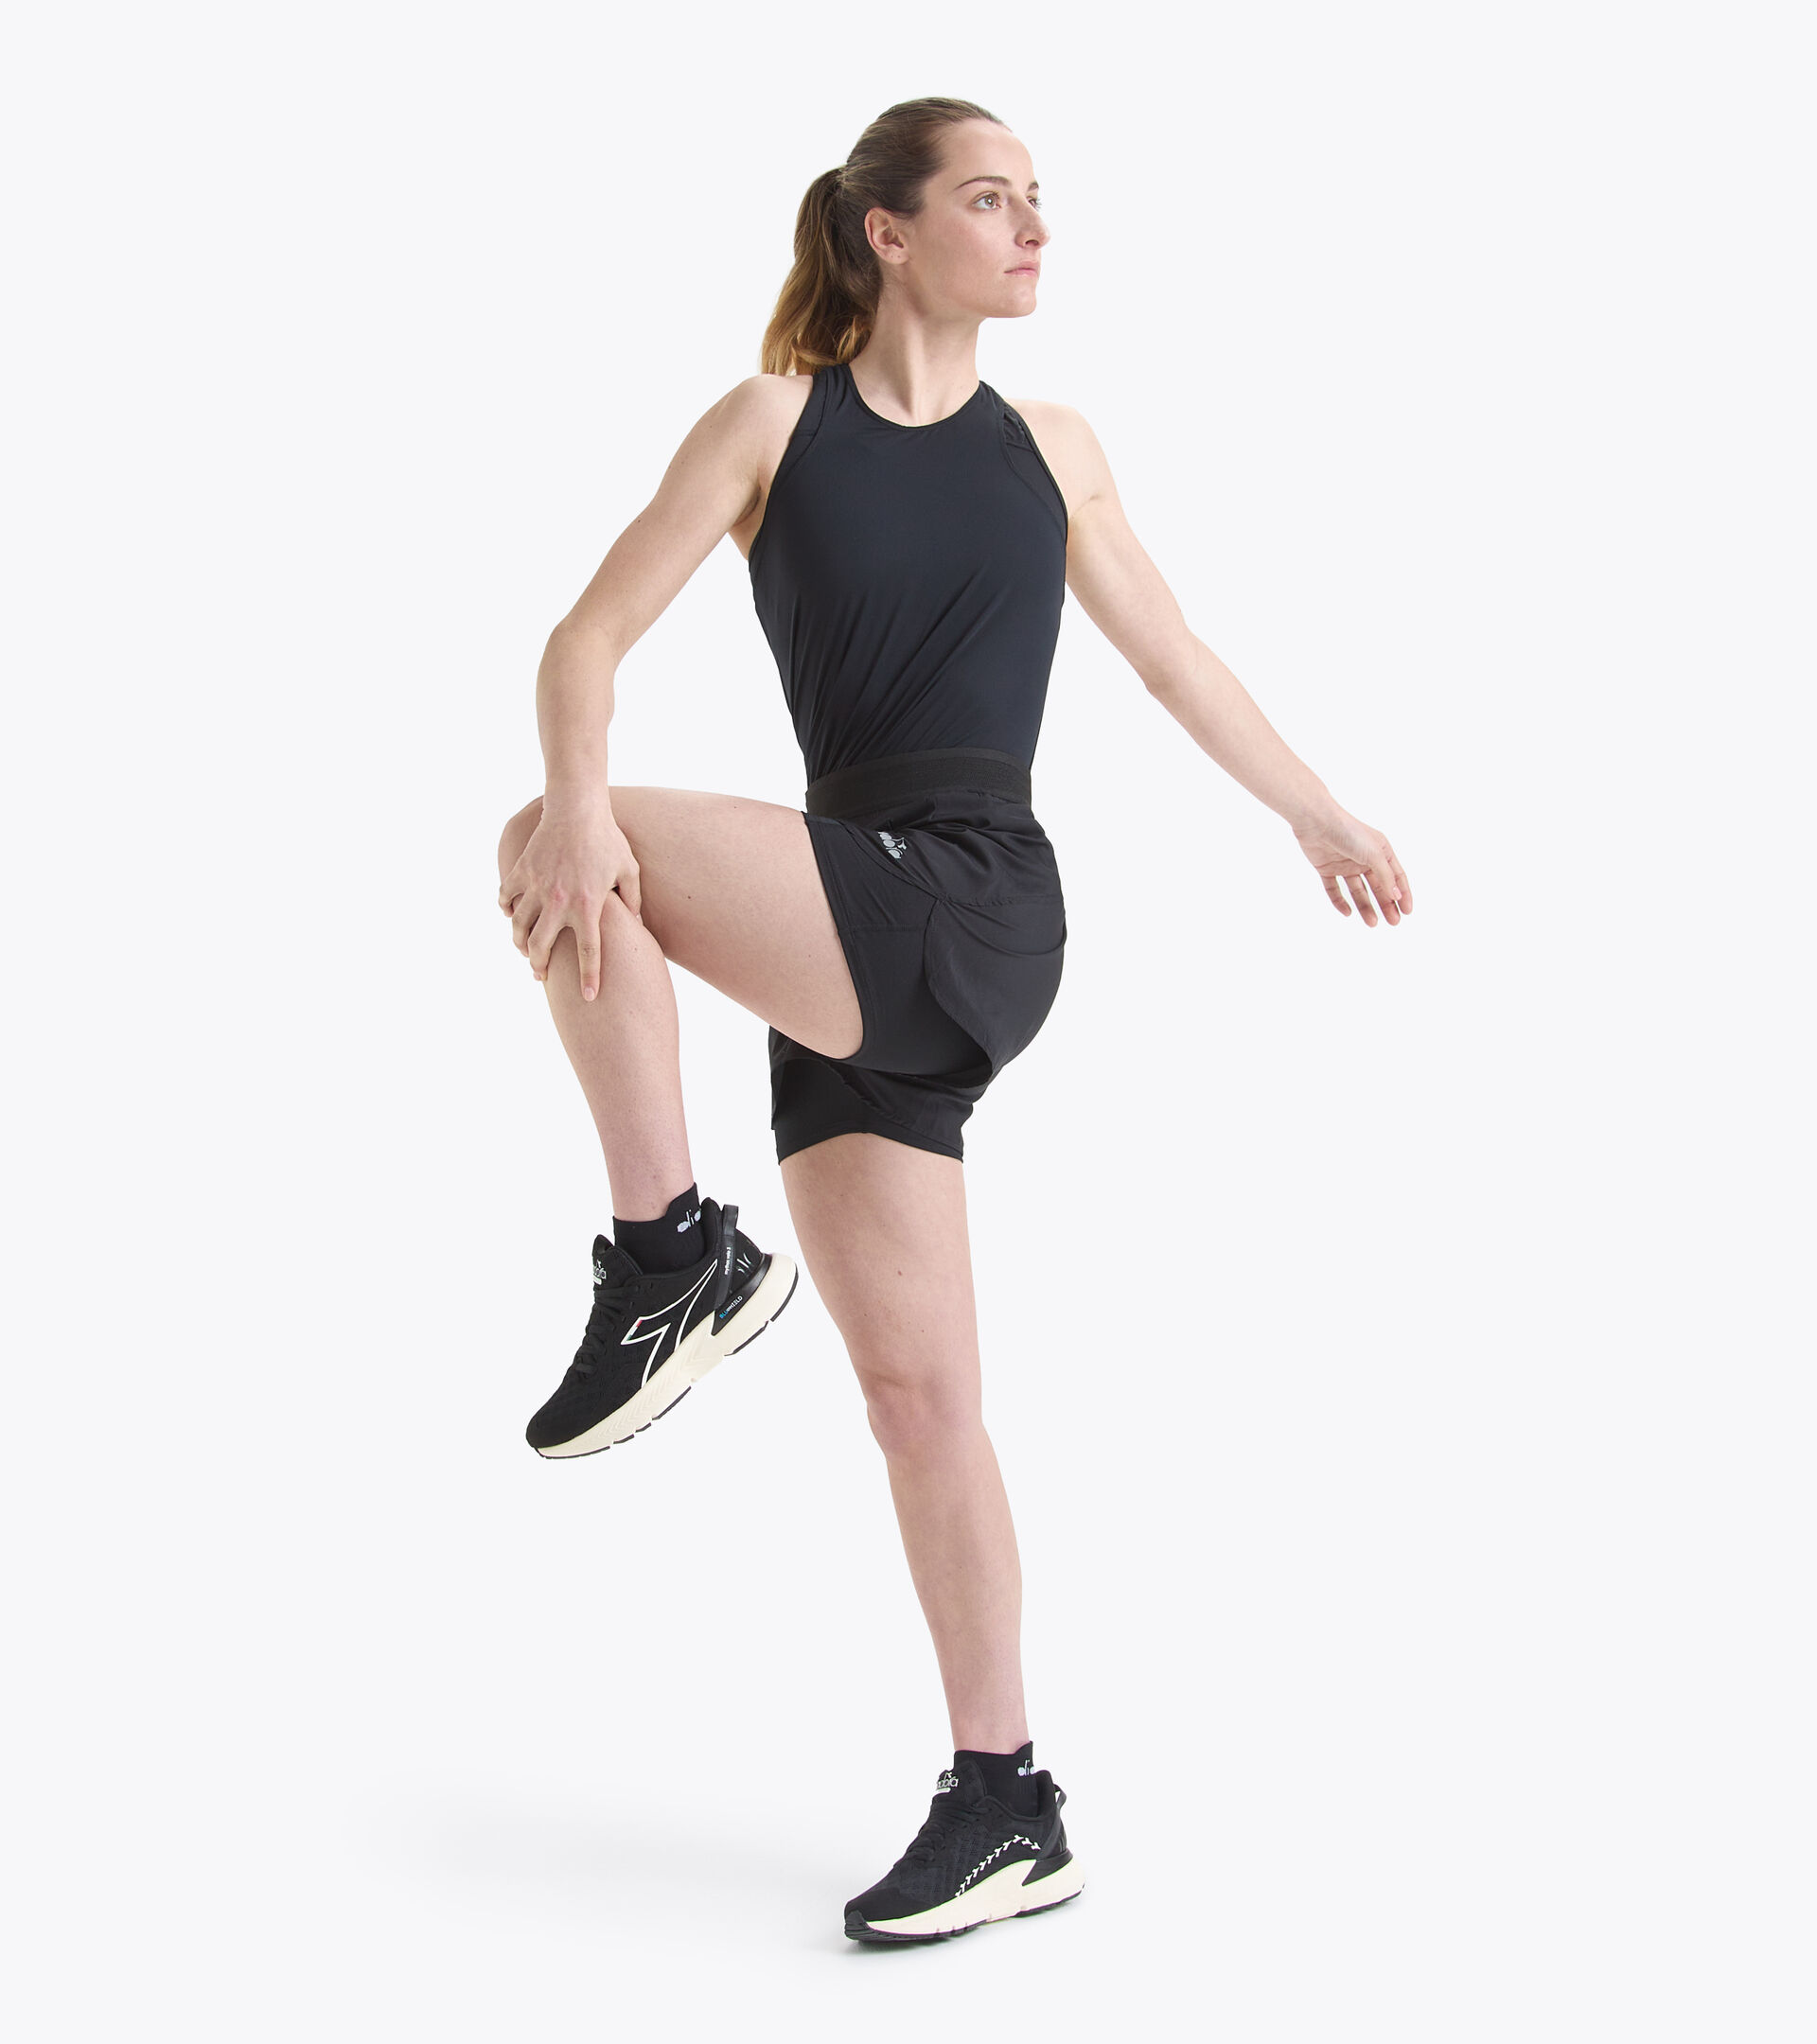 Running shorts - Women  L. DOUBLE LAYER SHORTS BE ONE BLACK - Diadora